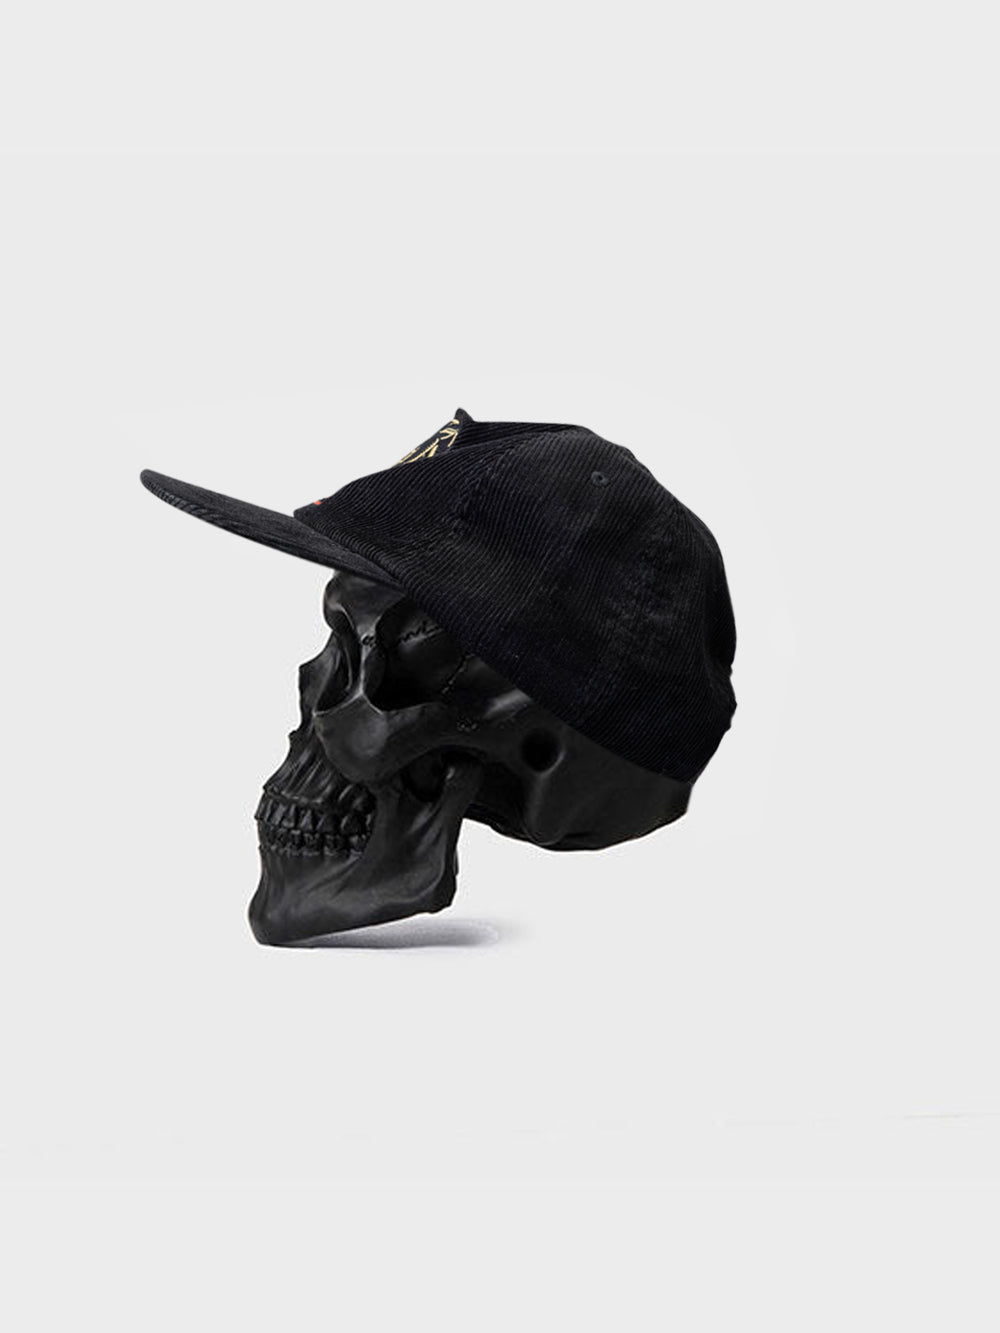 Billy Bones Club -  Panther Cord Cap in Black